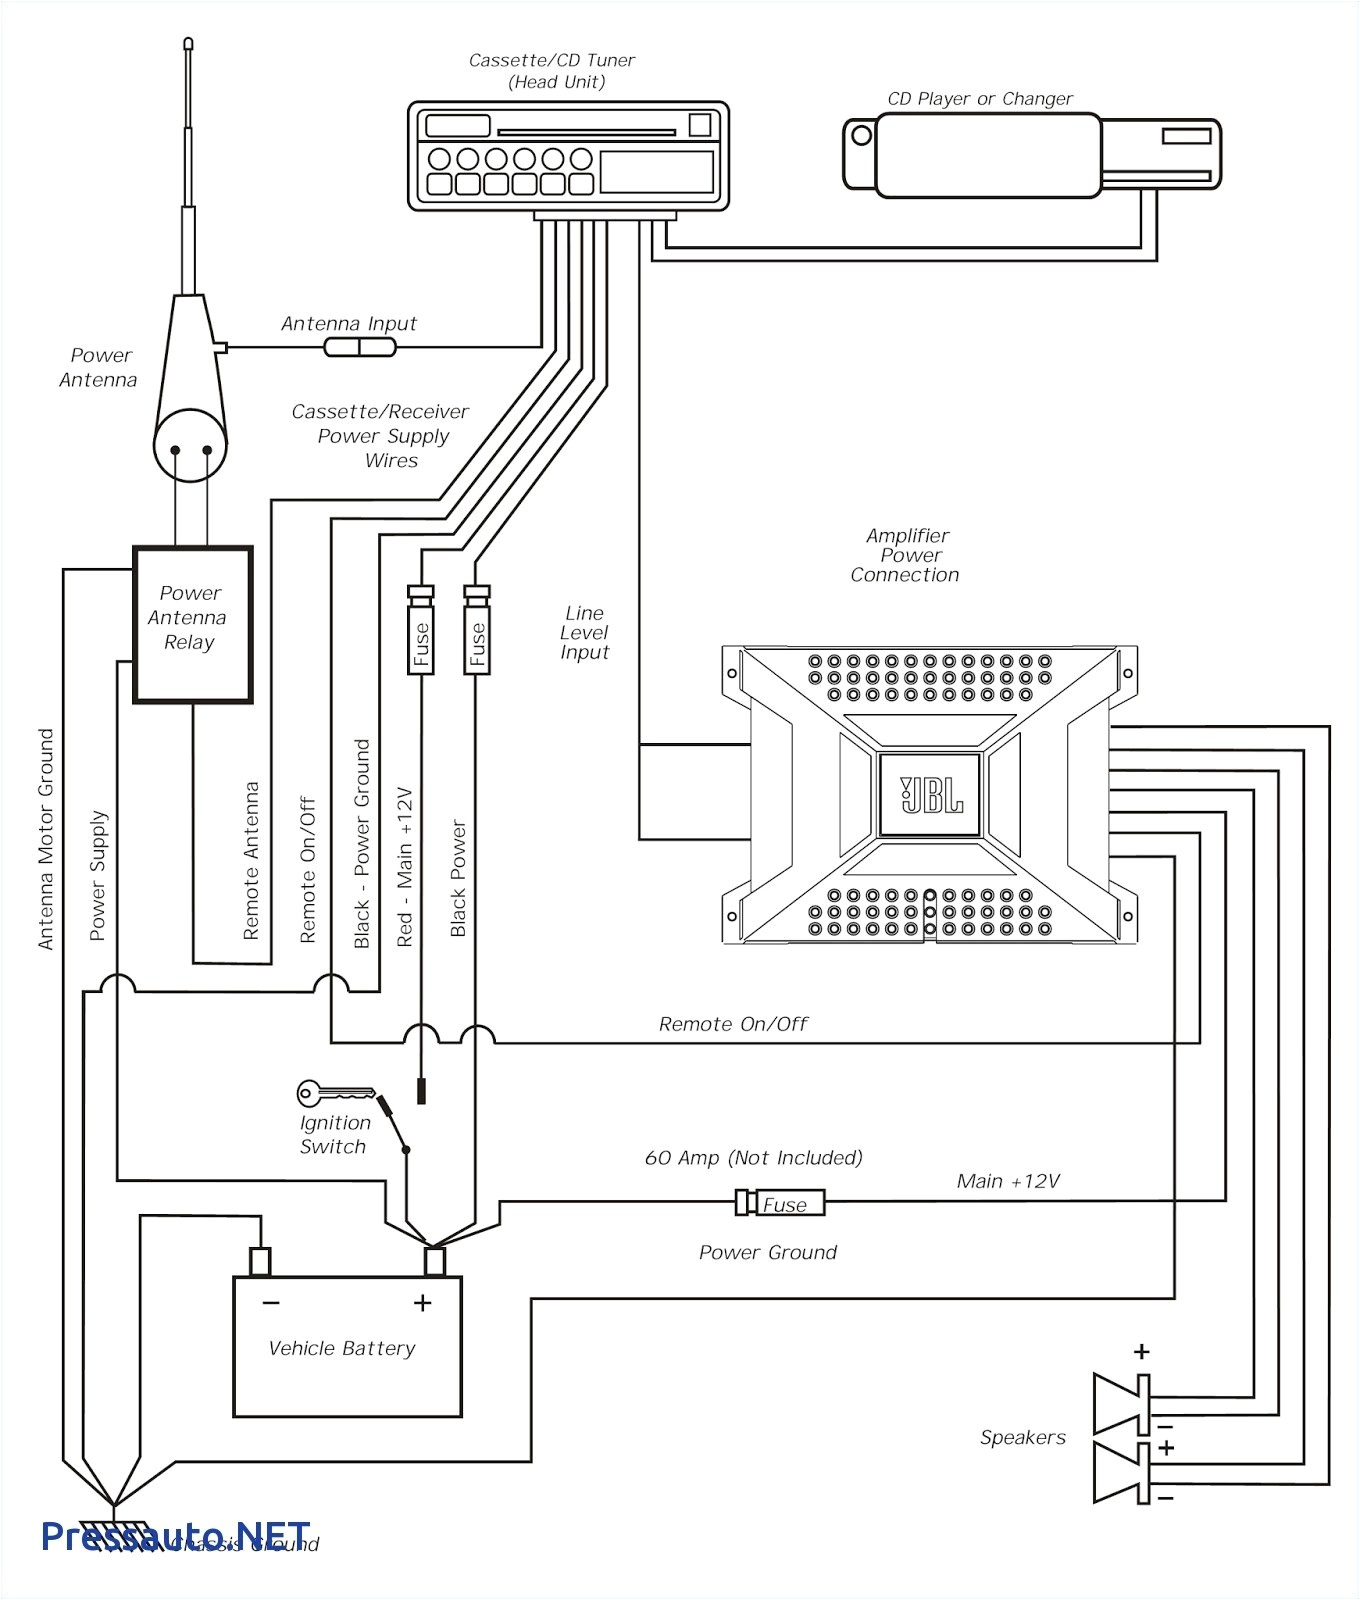 jvc kd r310 wiring diagram electrick wiring diagram cocar stereo jvc kd r330 wiring diagram